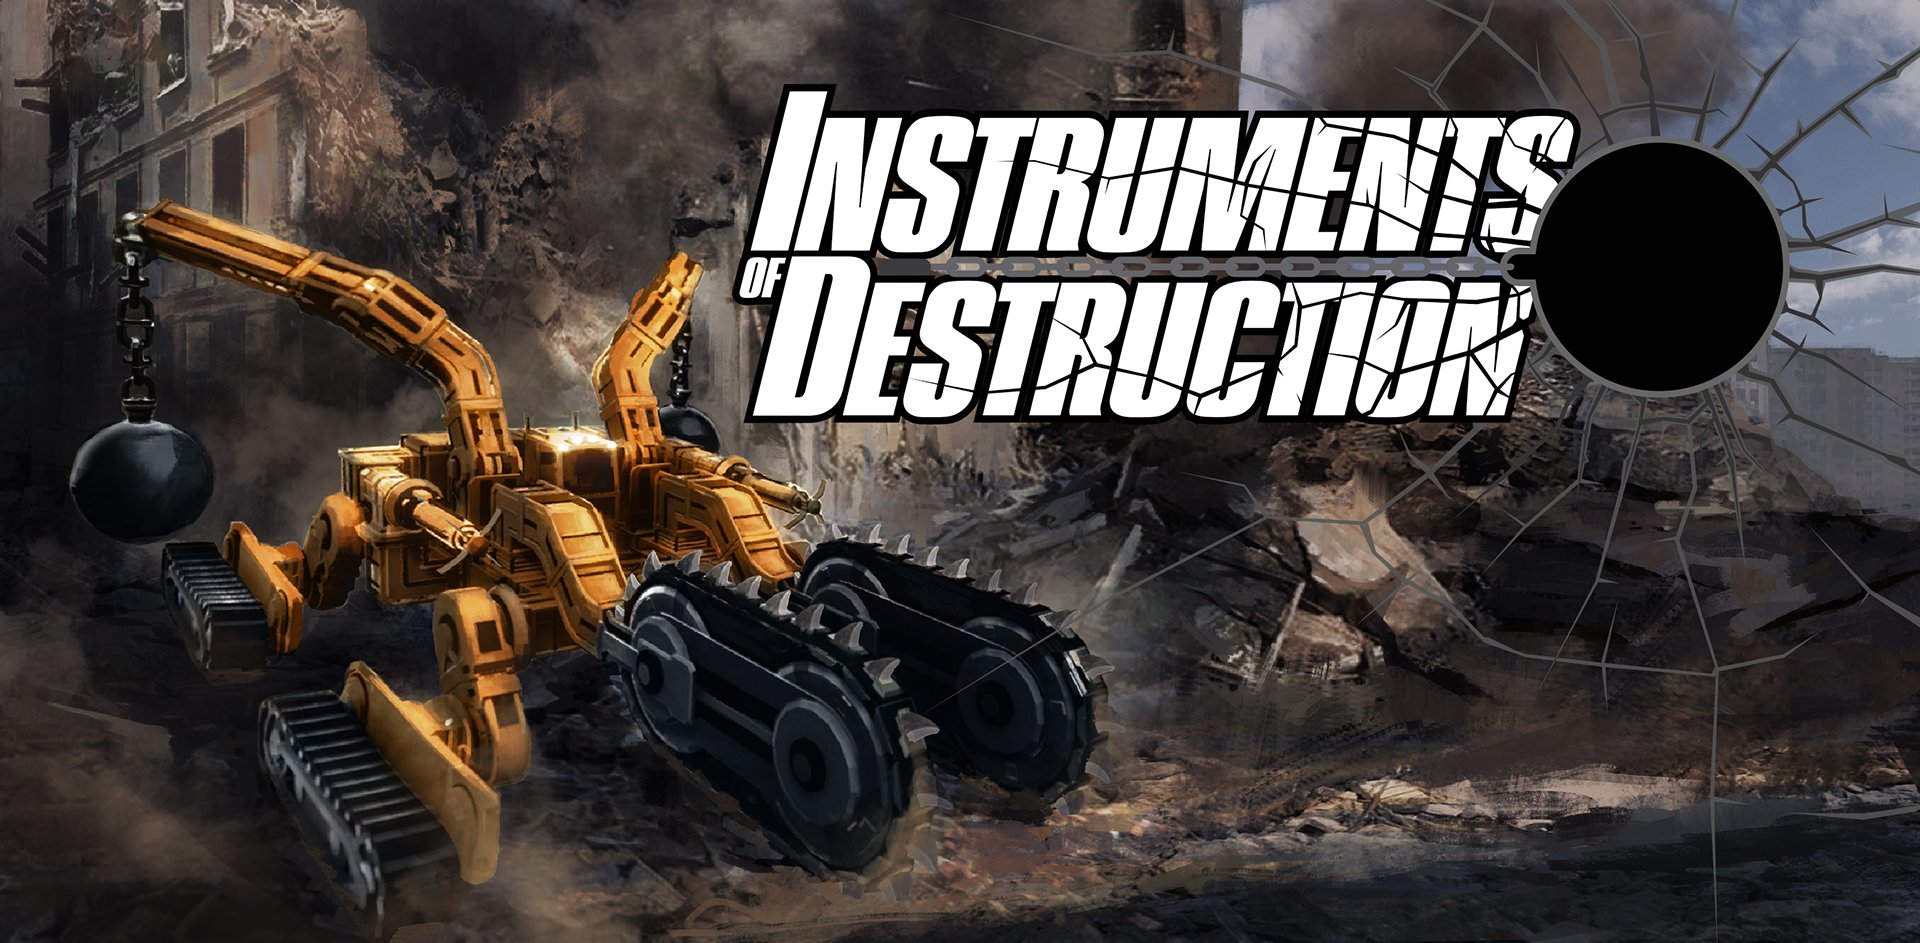 Instruments of Destruction